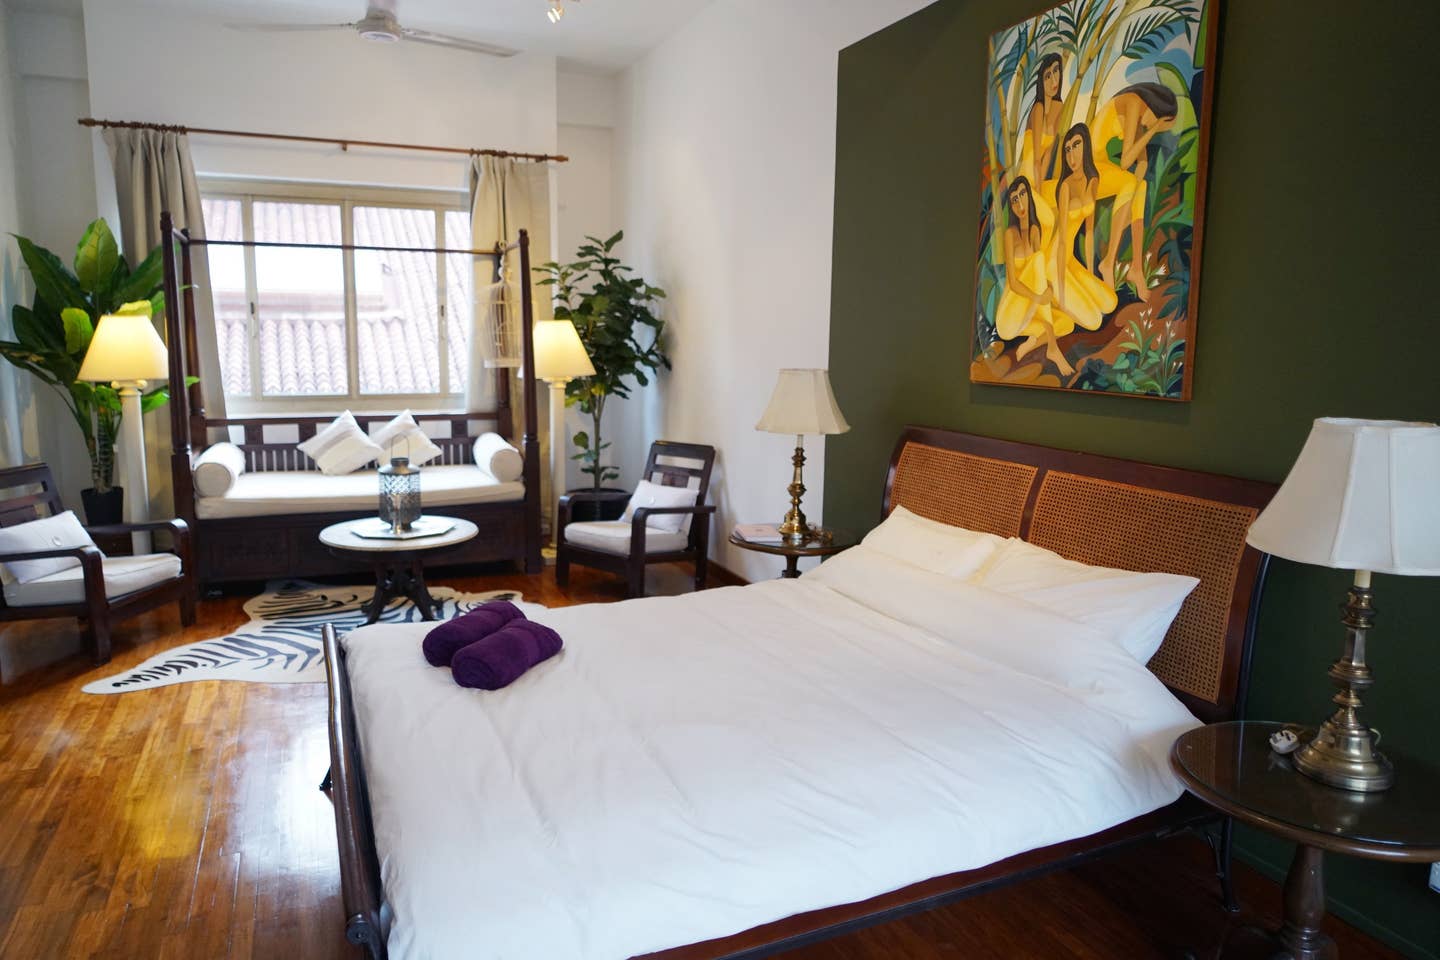 Airbnb Rentals in Singapore